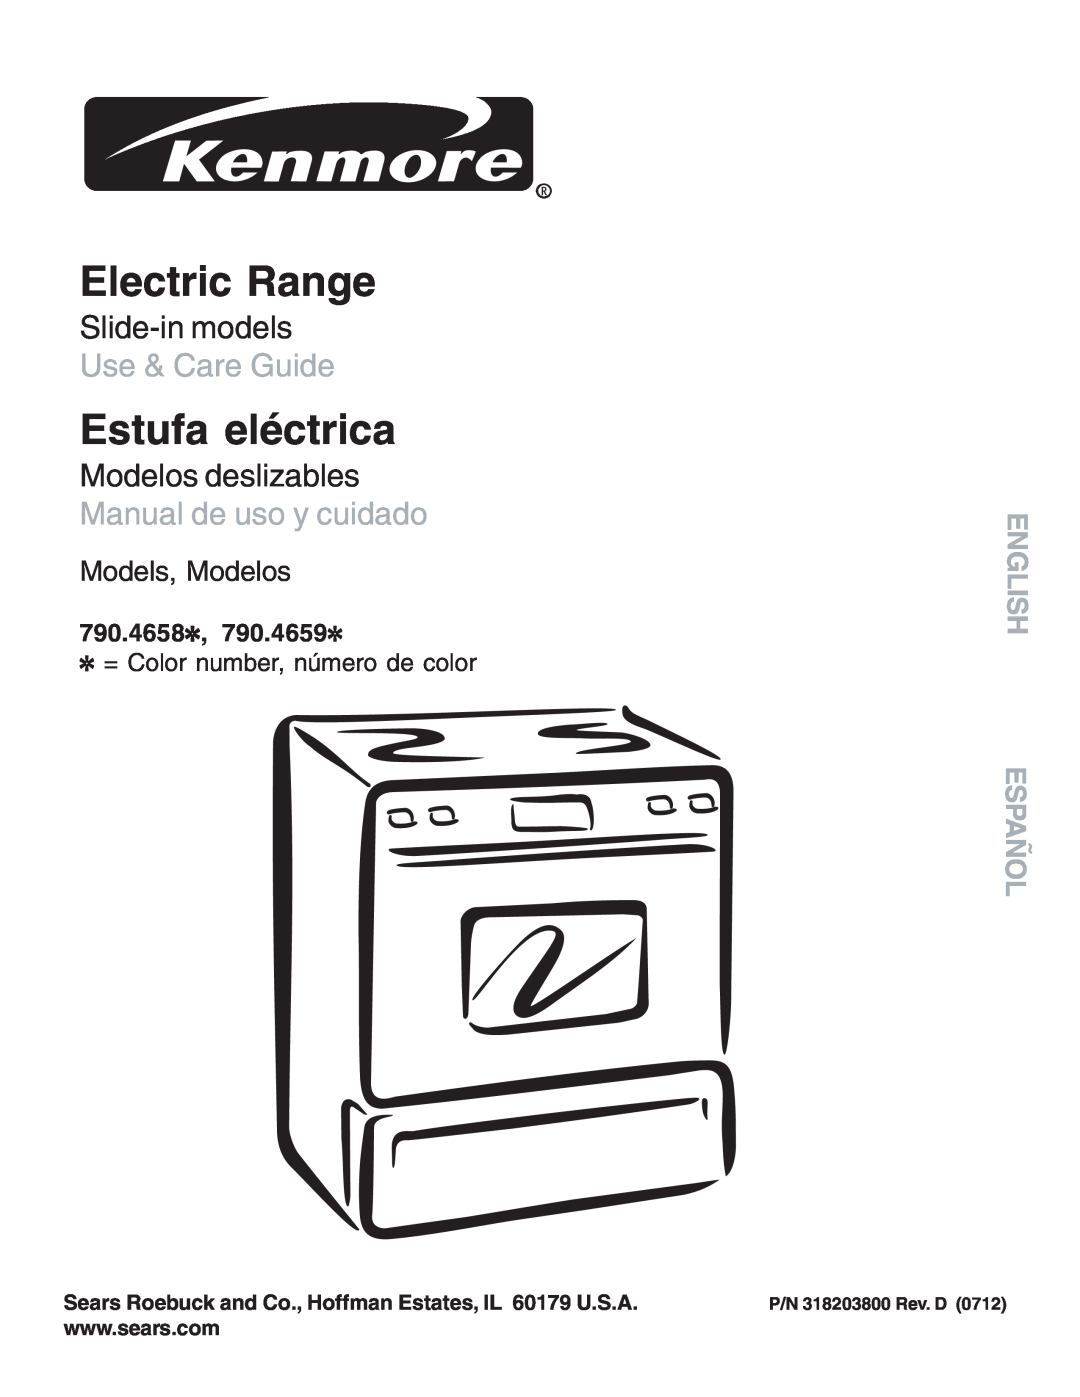 Kenmore manual Electric Range, Estufa eléctrica, 790.46585, Slide-in models, Use & Care Guide, Models, Modelos 